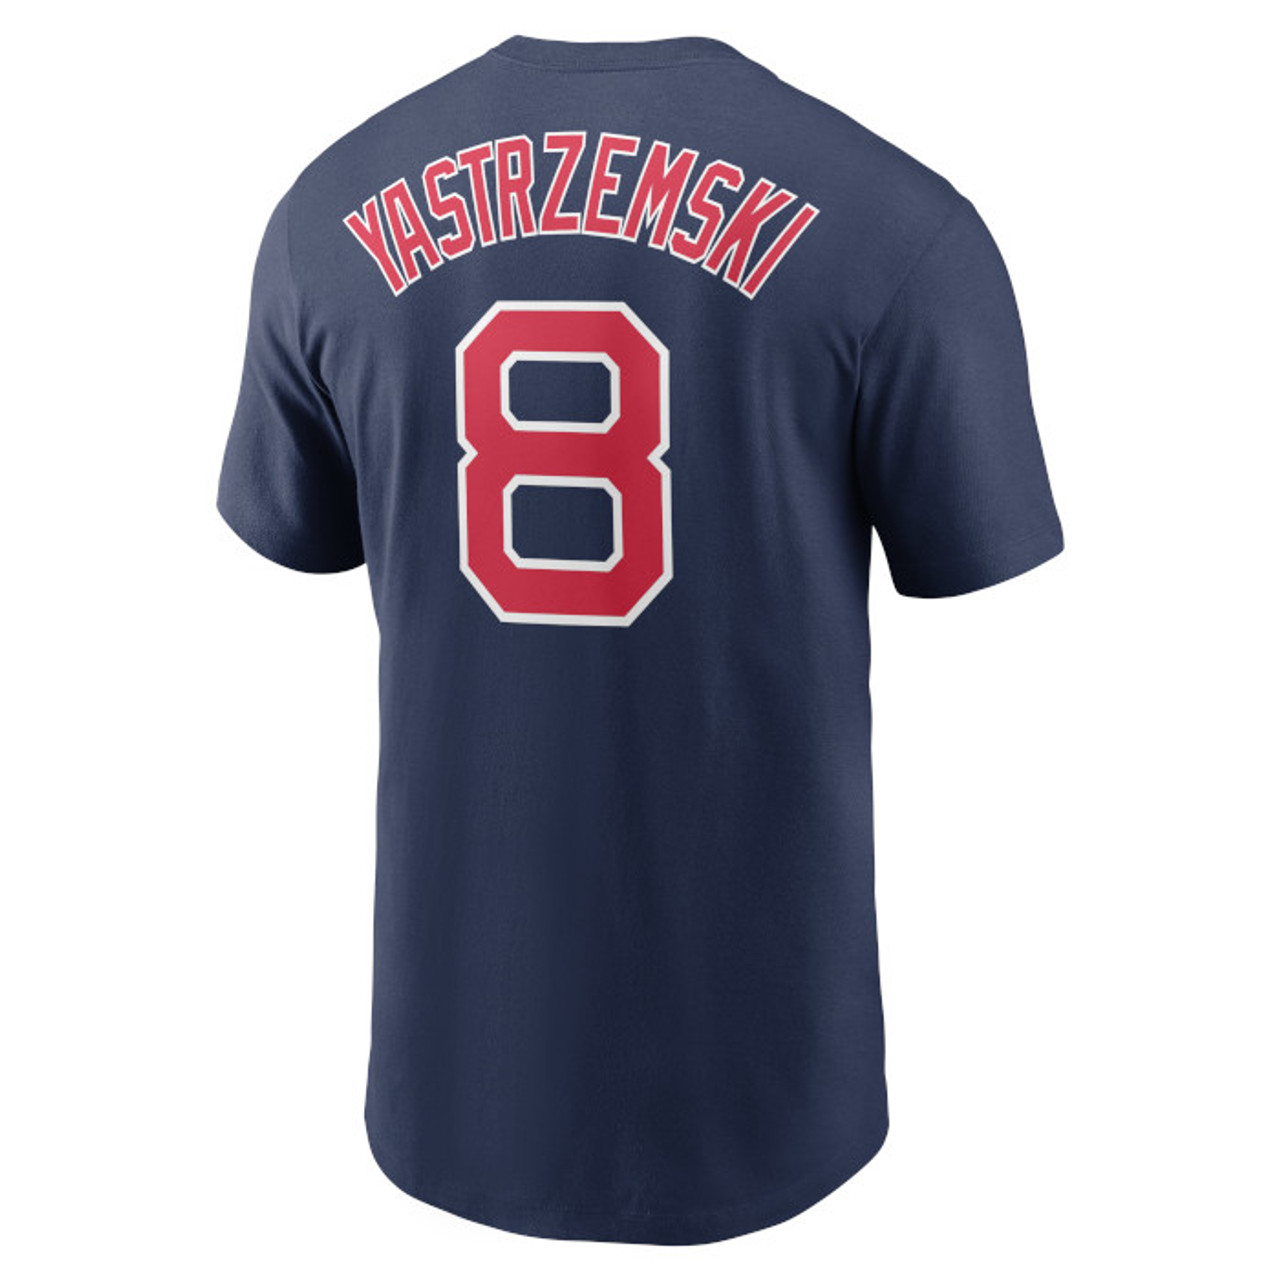 Boston Red Sox NIKE Grey ROAD Carl Yastrzemski #8 Jersey – 19JerseyStreet